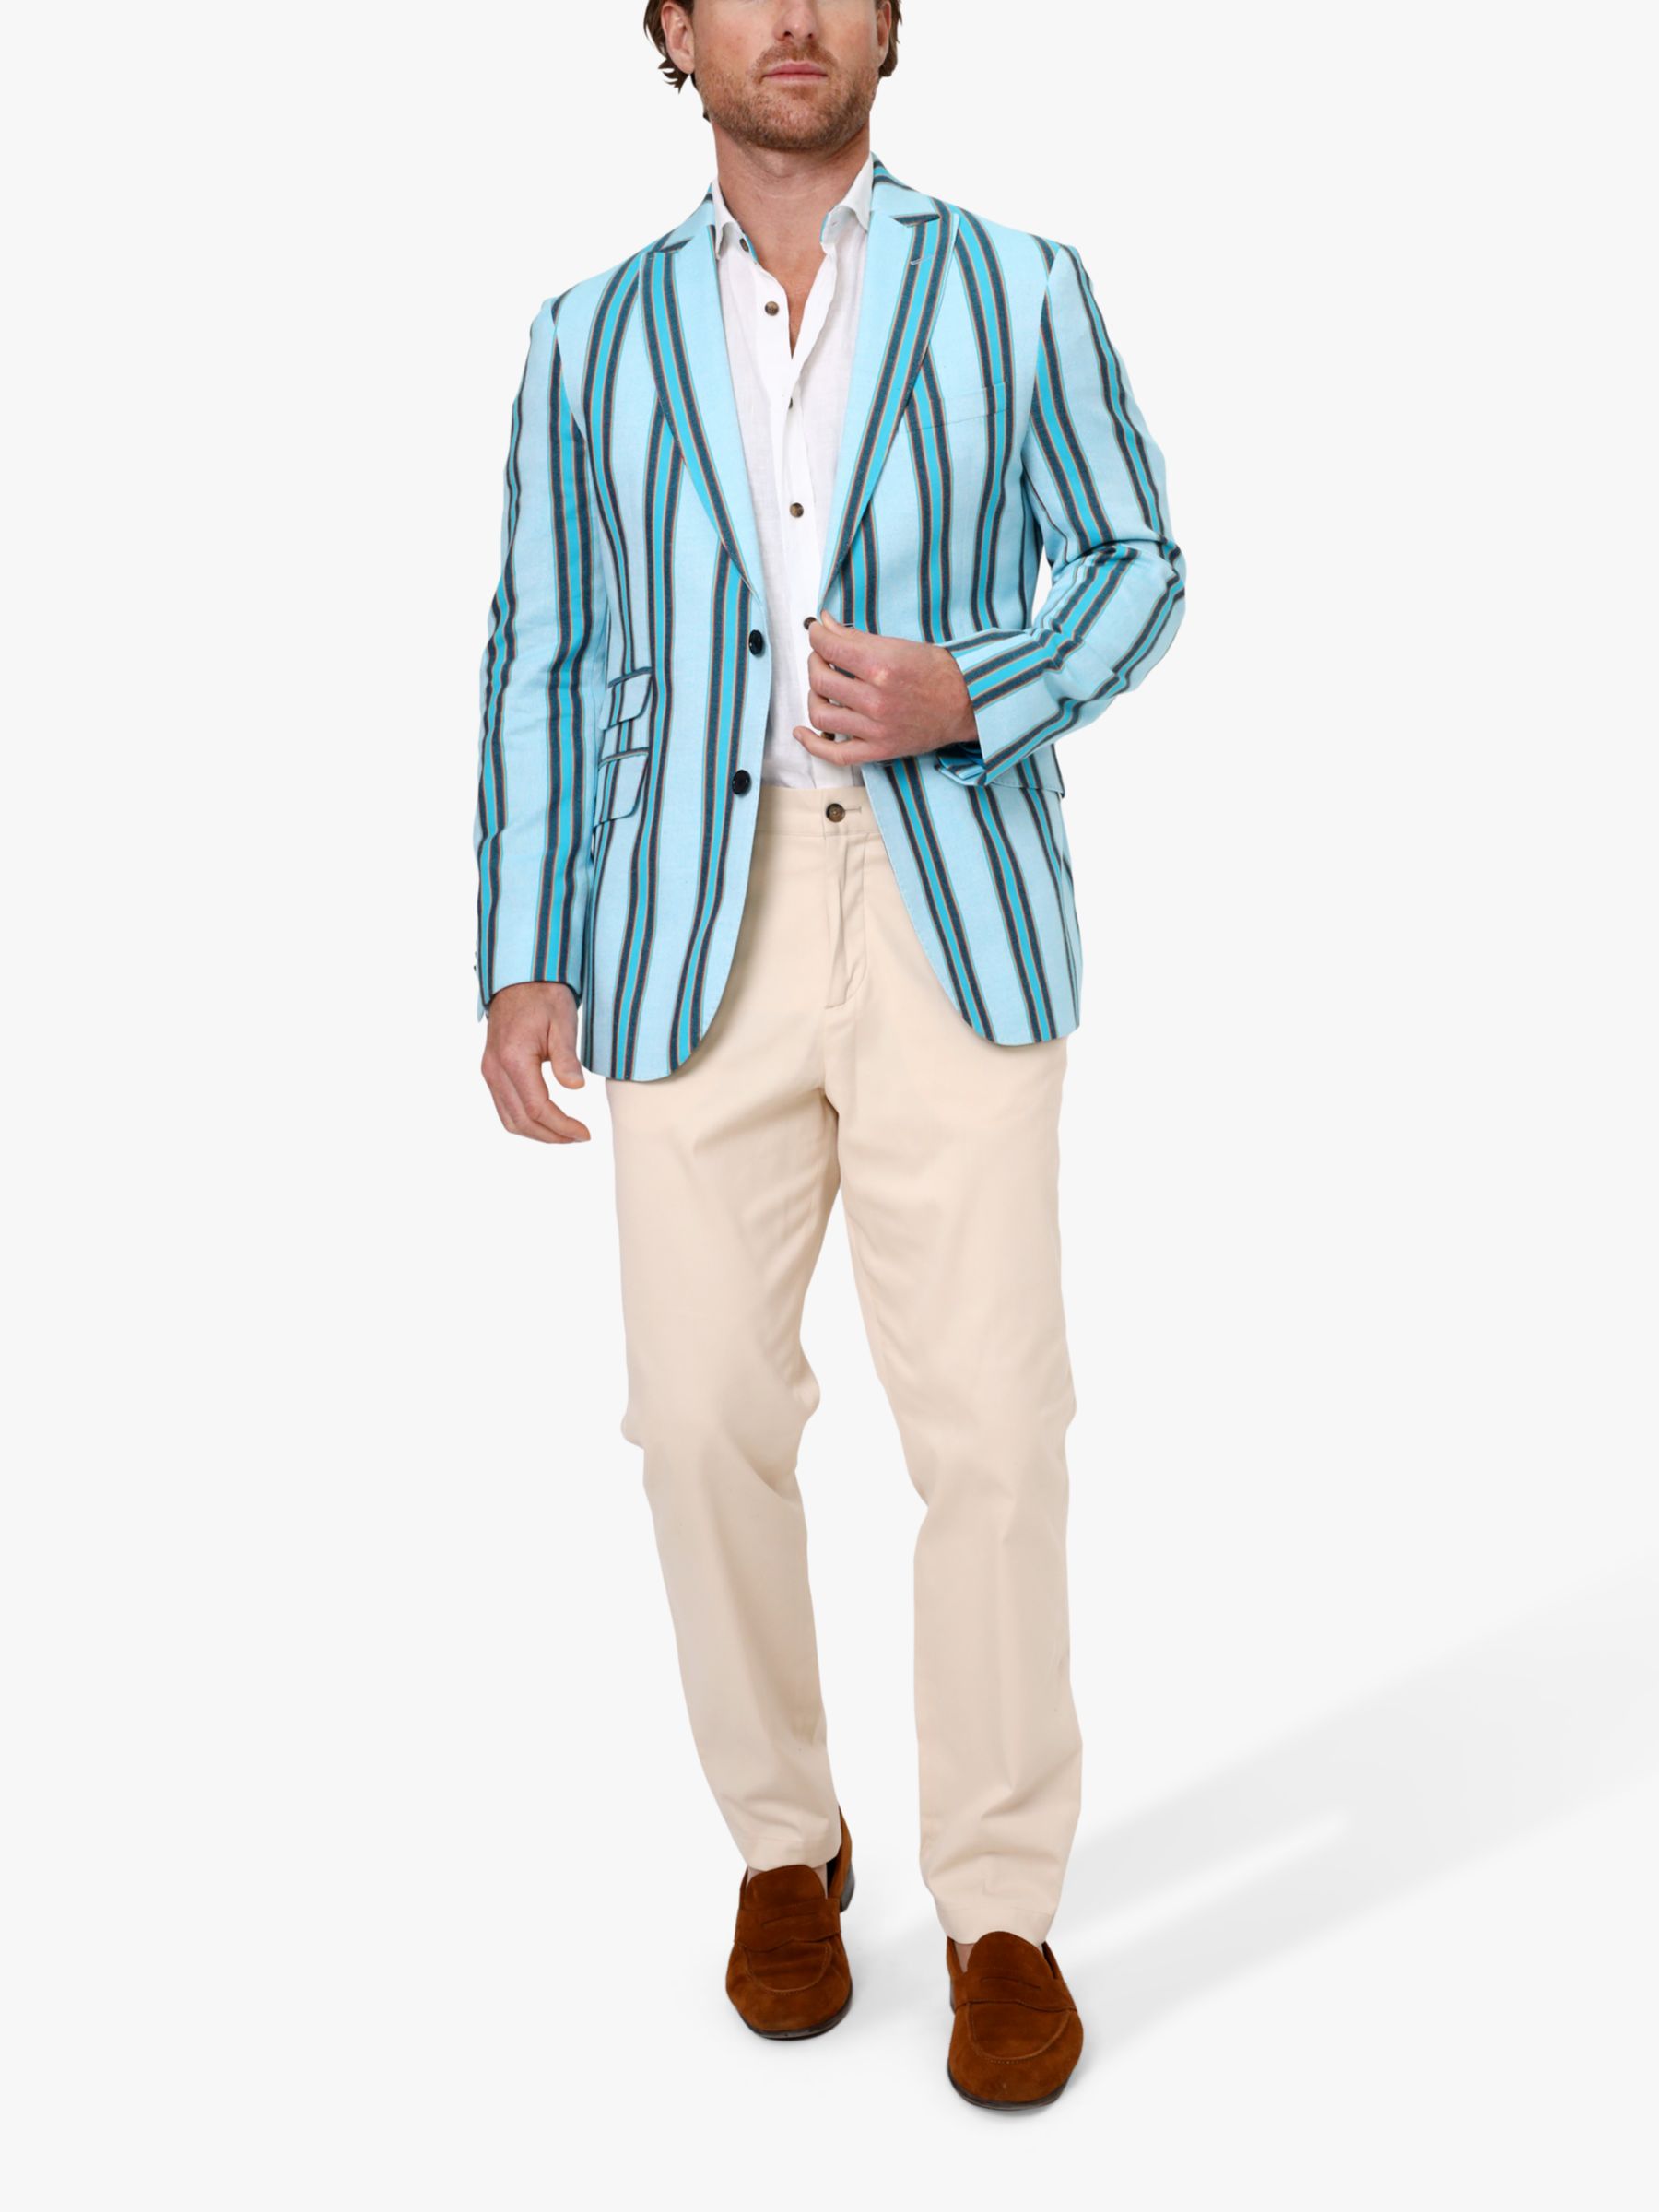 KOY Kikoy Striped Blazer, Turquoise, 38R